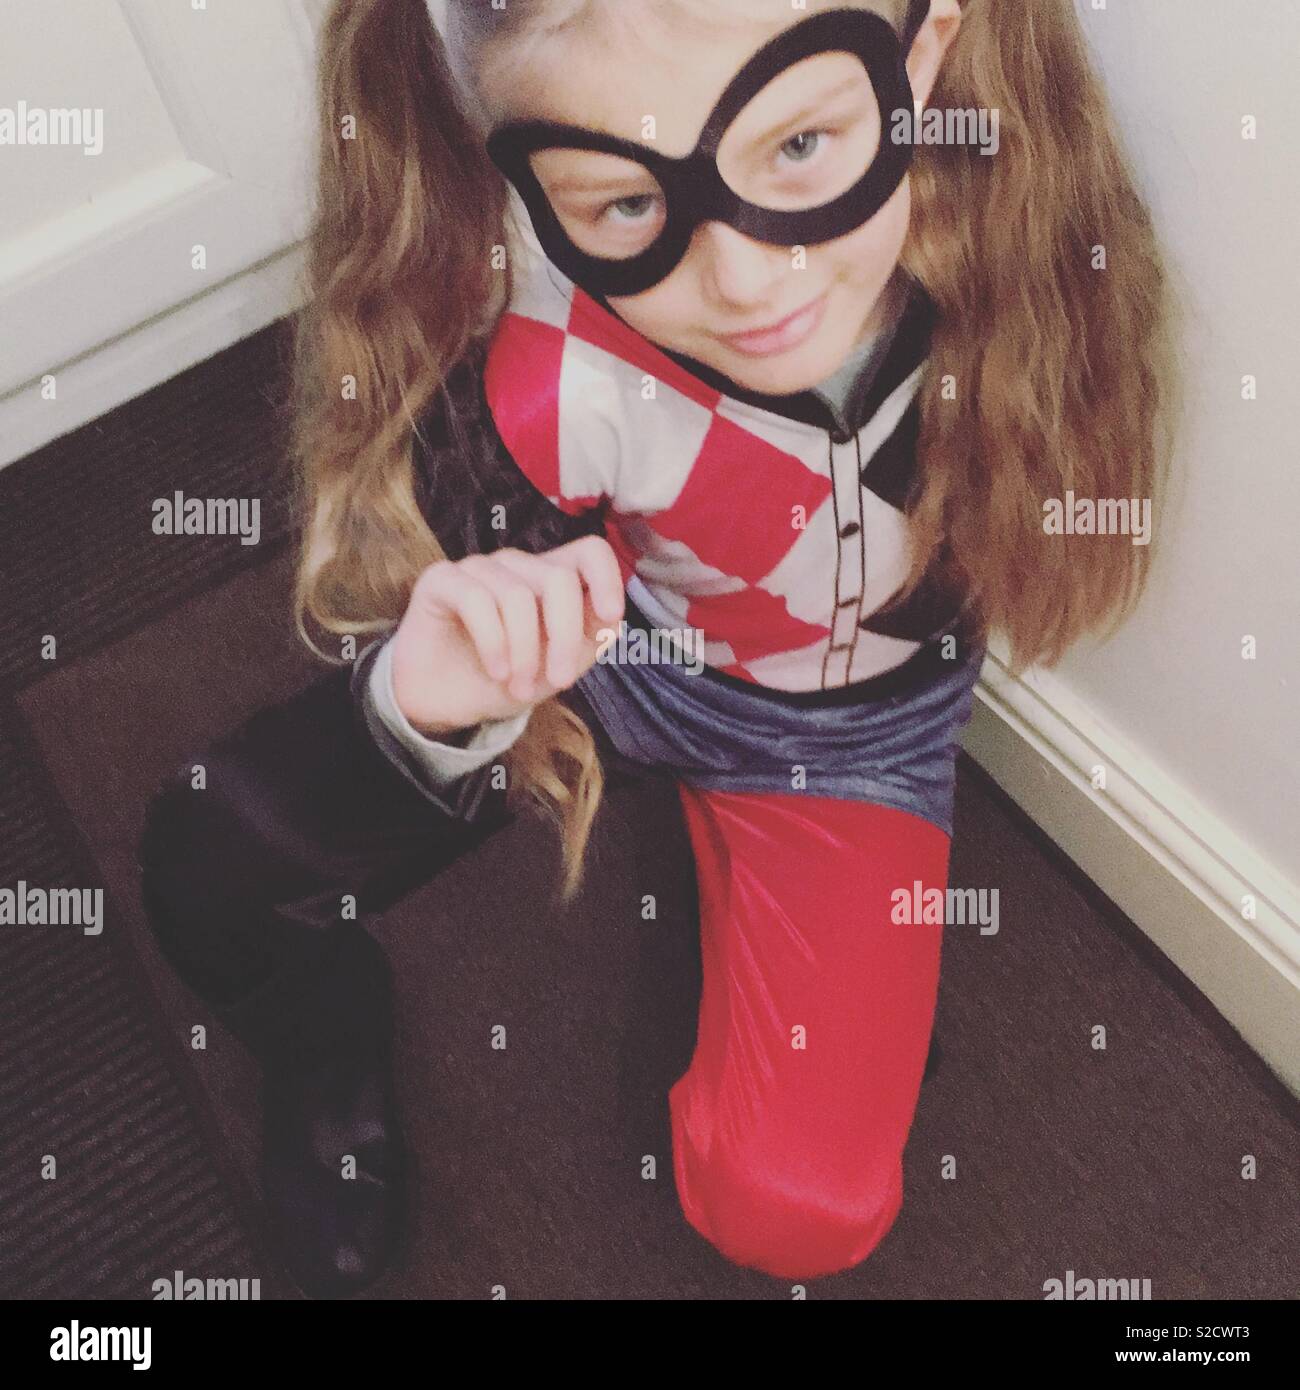 Girl dressed as Harley Quinn for Halloween Stock Photo